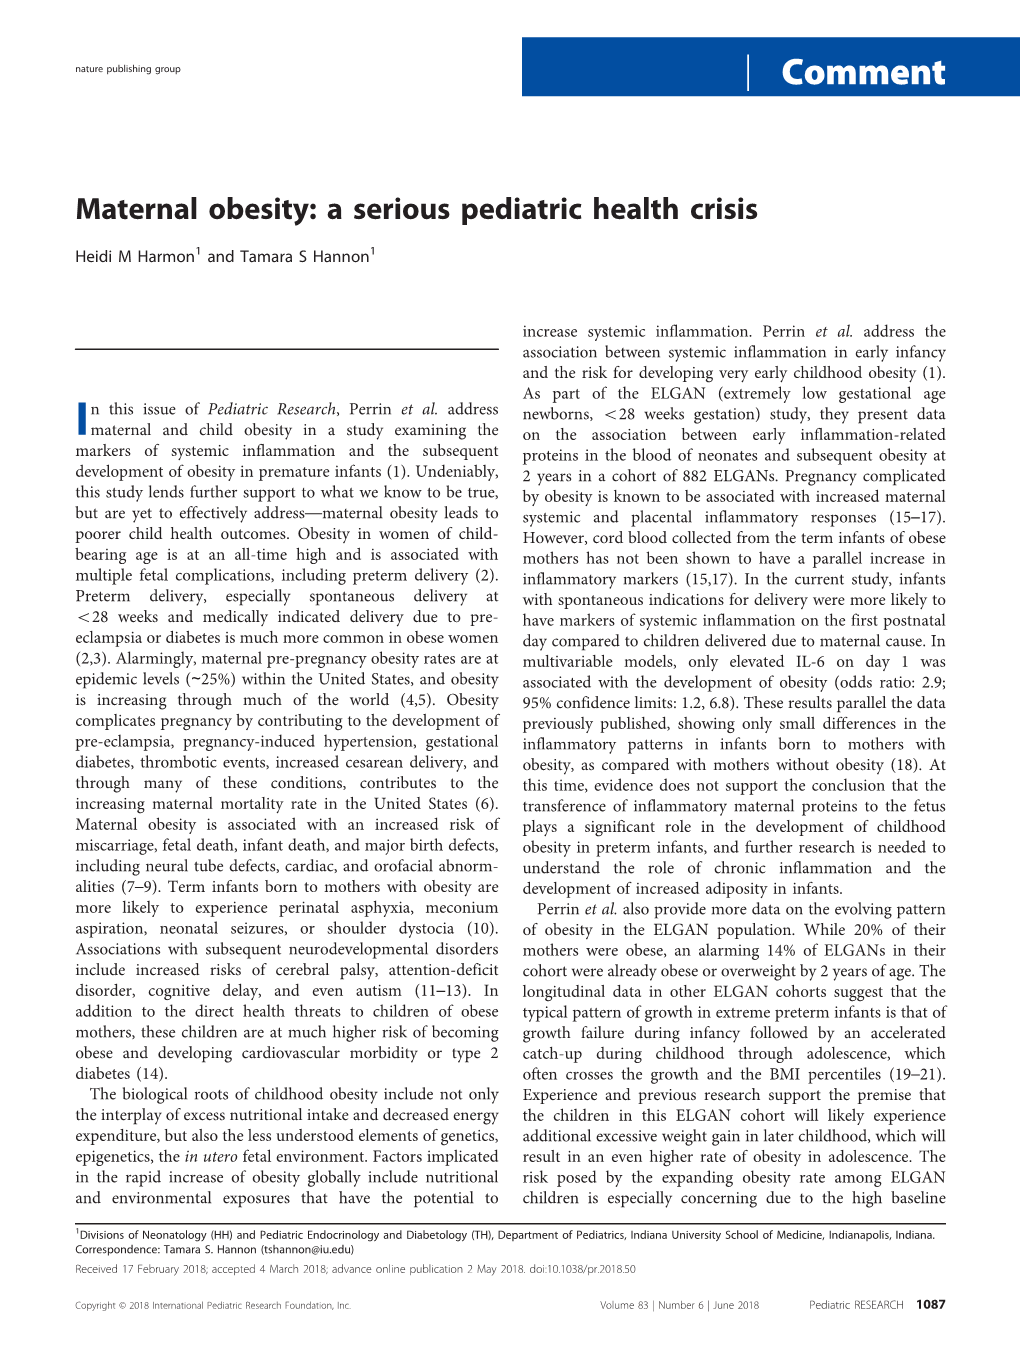 Maternal Obesity: a Serious Pediatric Health Crisis